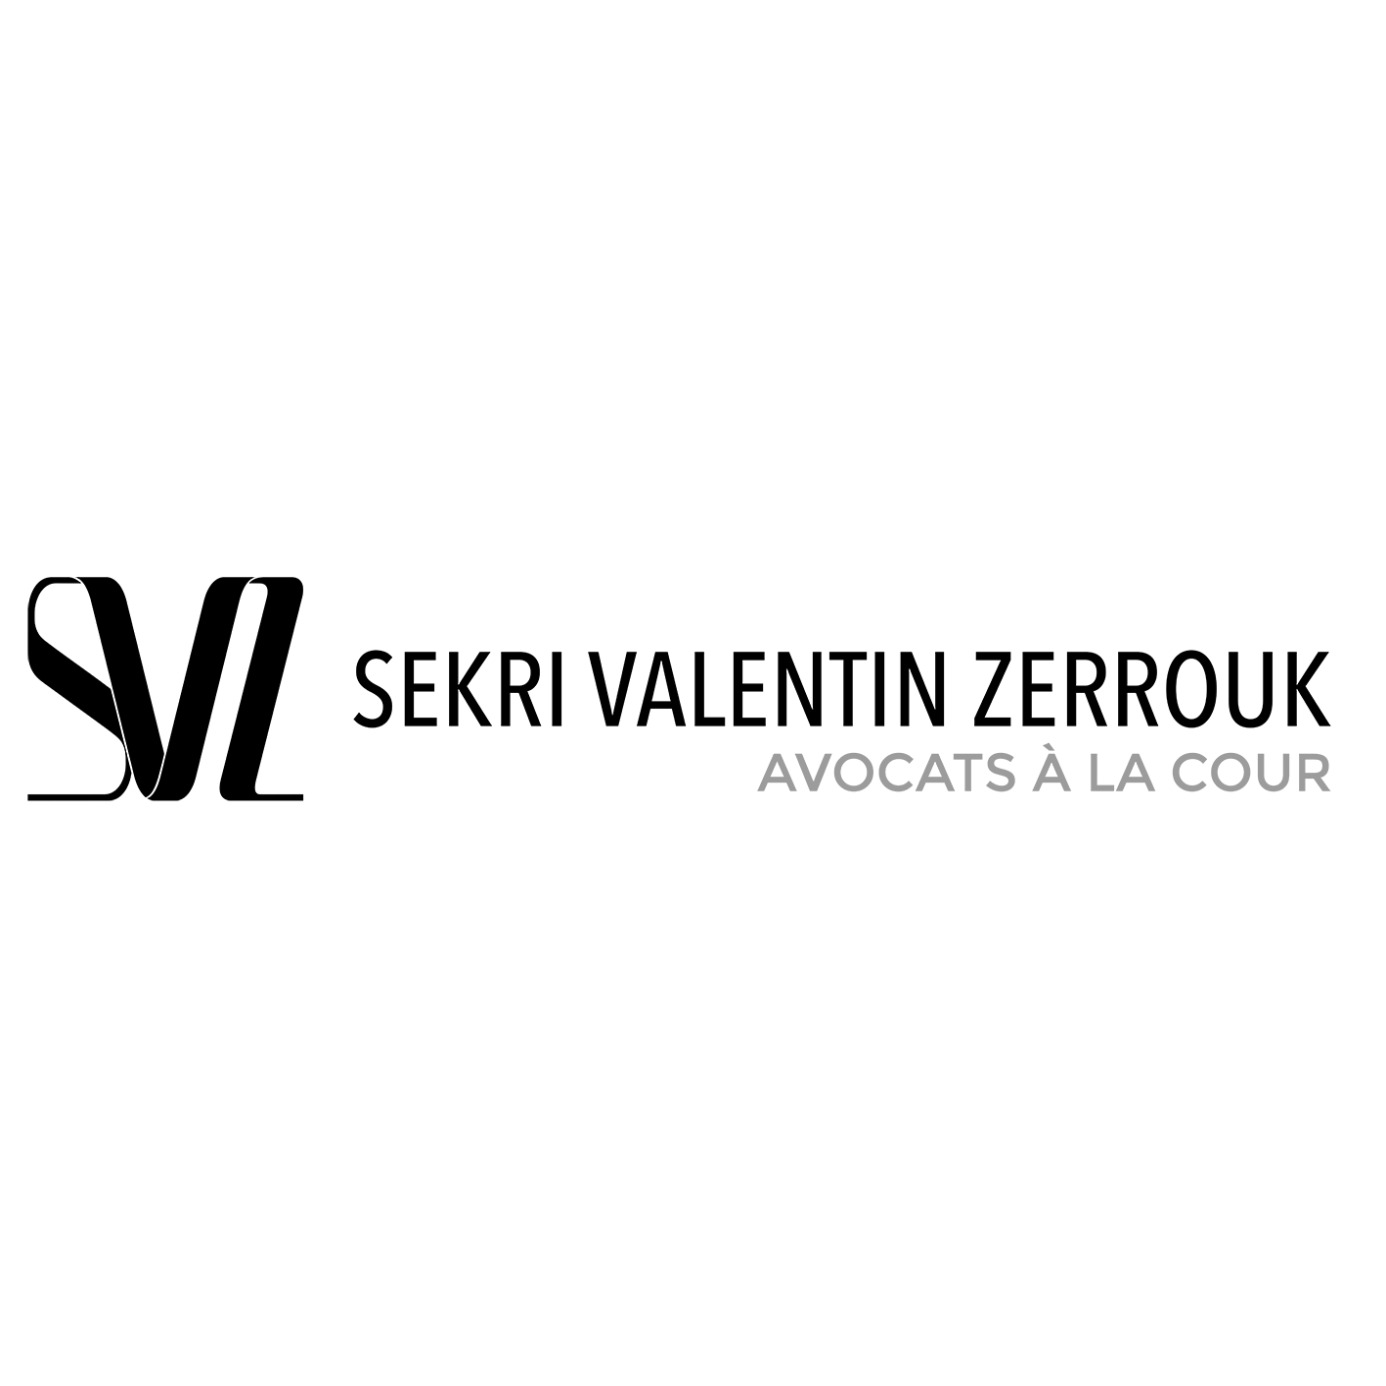 the Sekri Valentin Zerrouk logo.